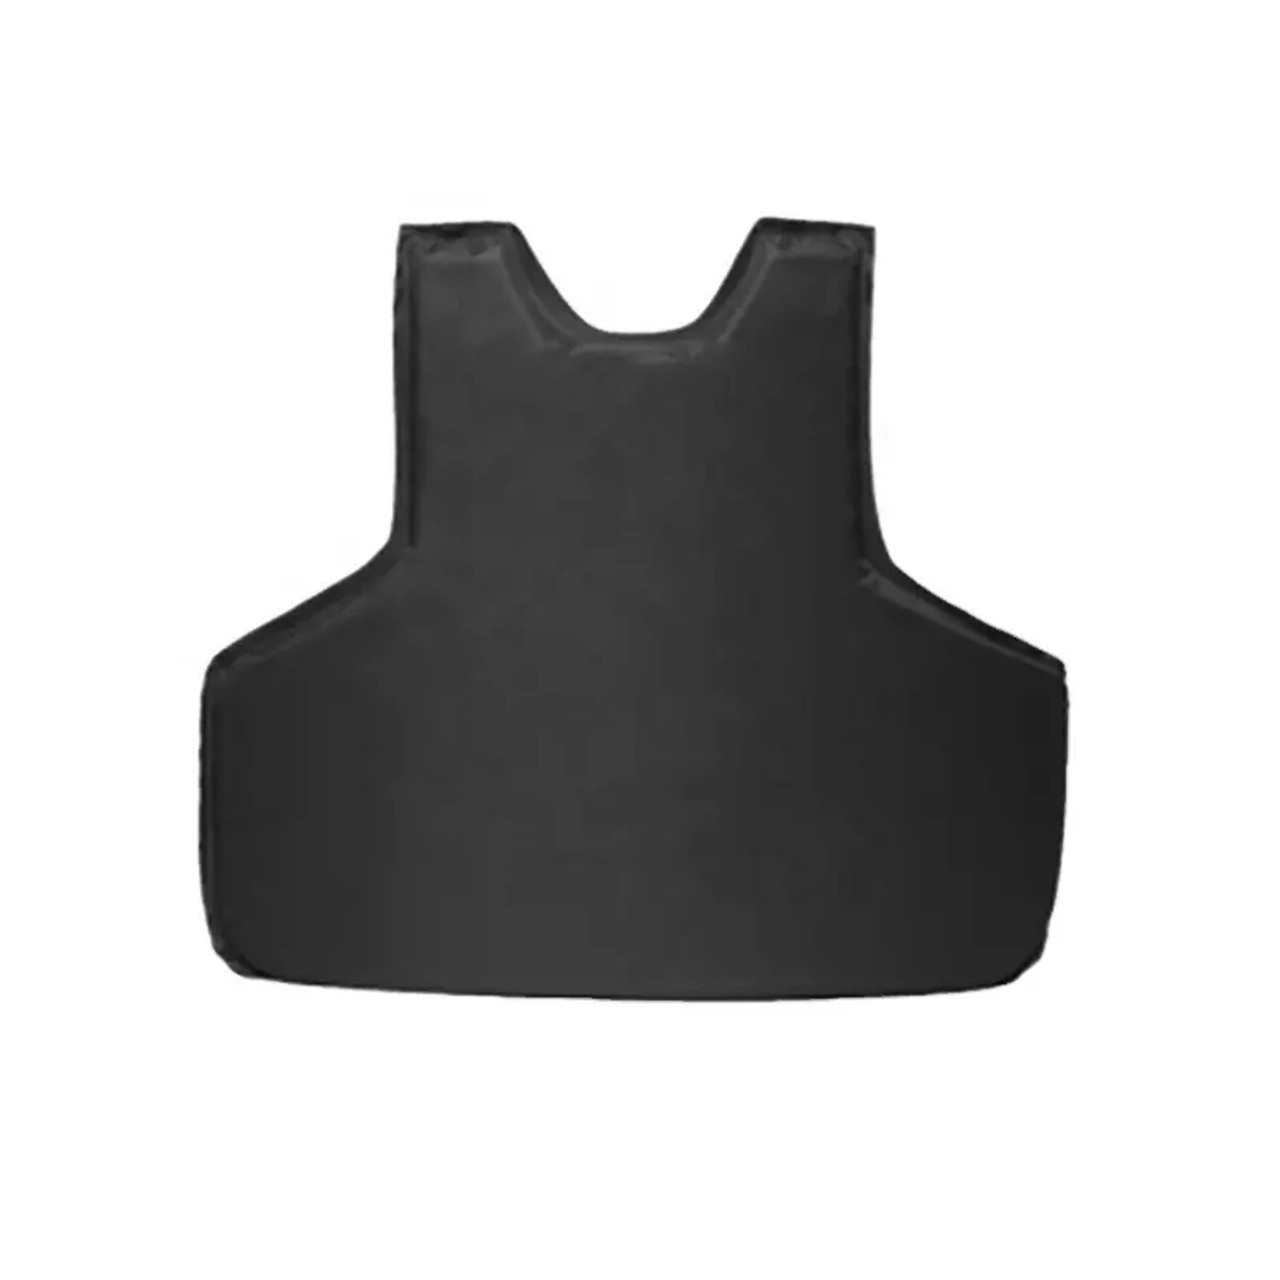 IIIA Soft Armor Vest Insert